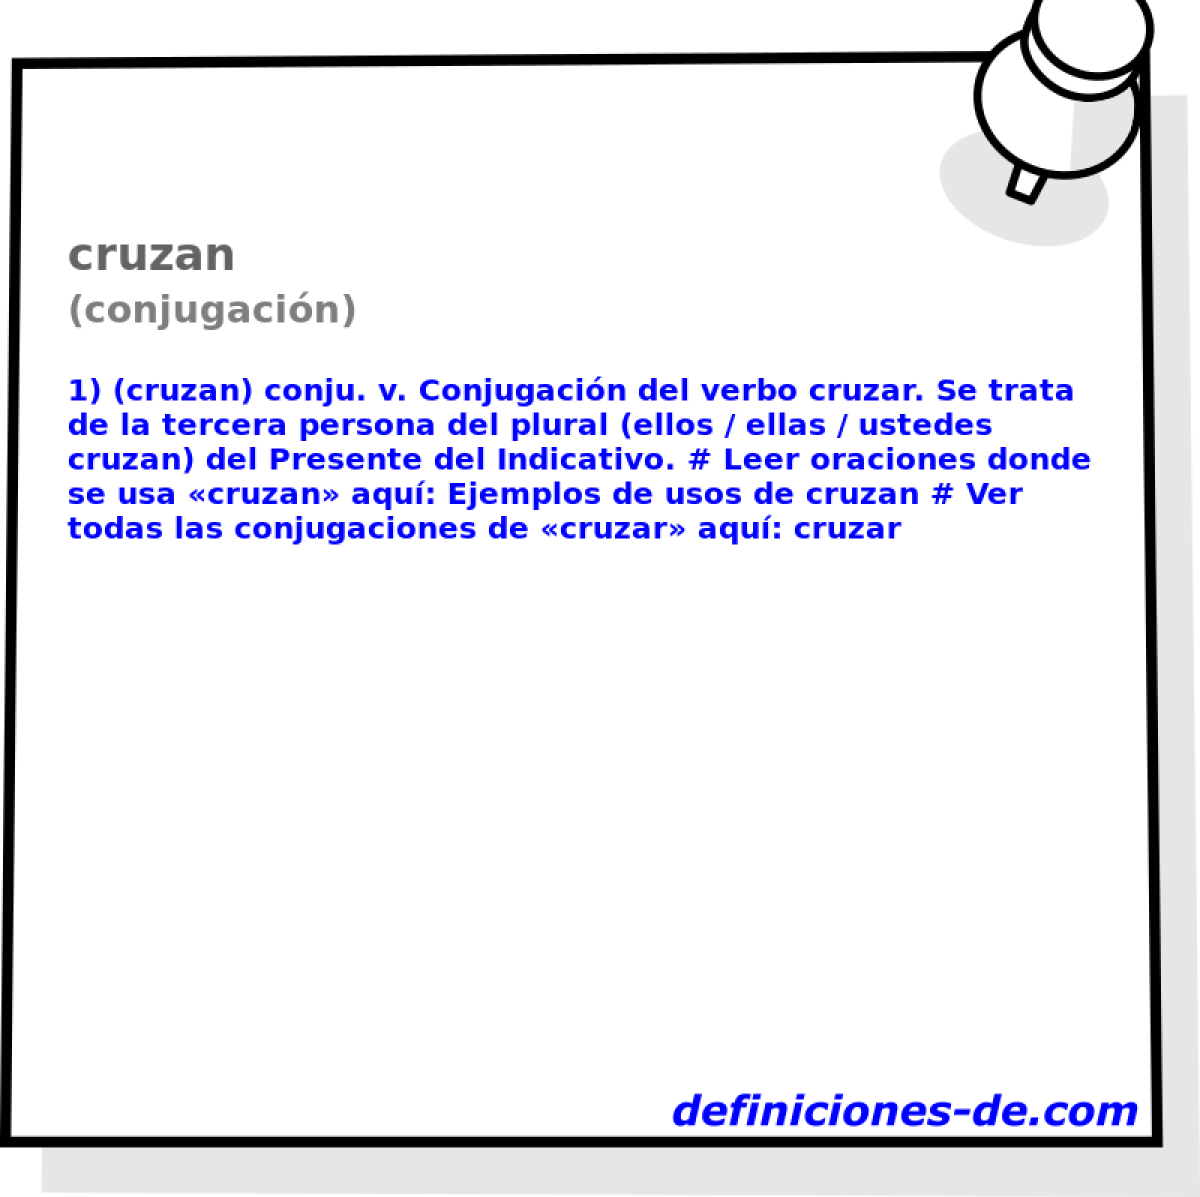 cruzan (conjugacin)